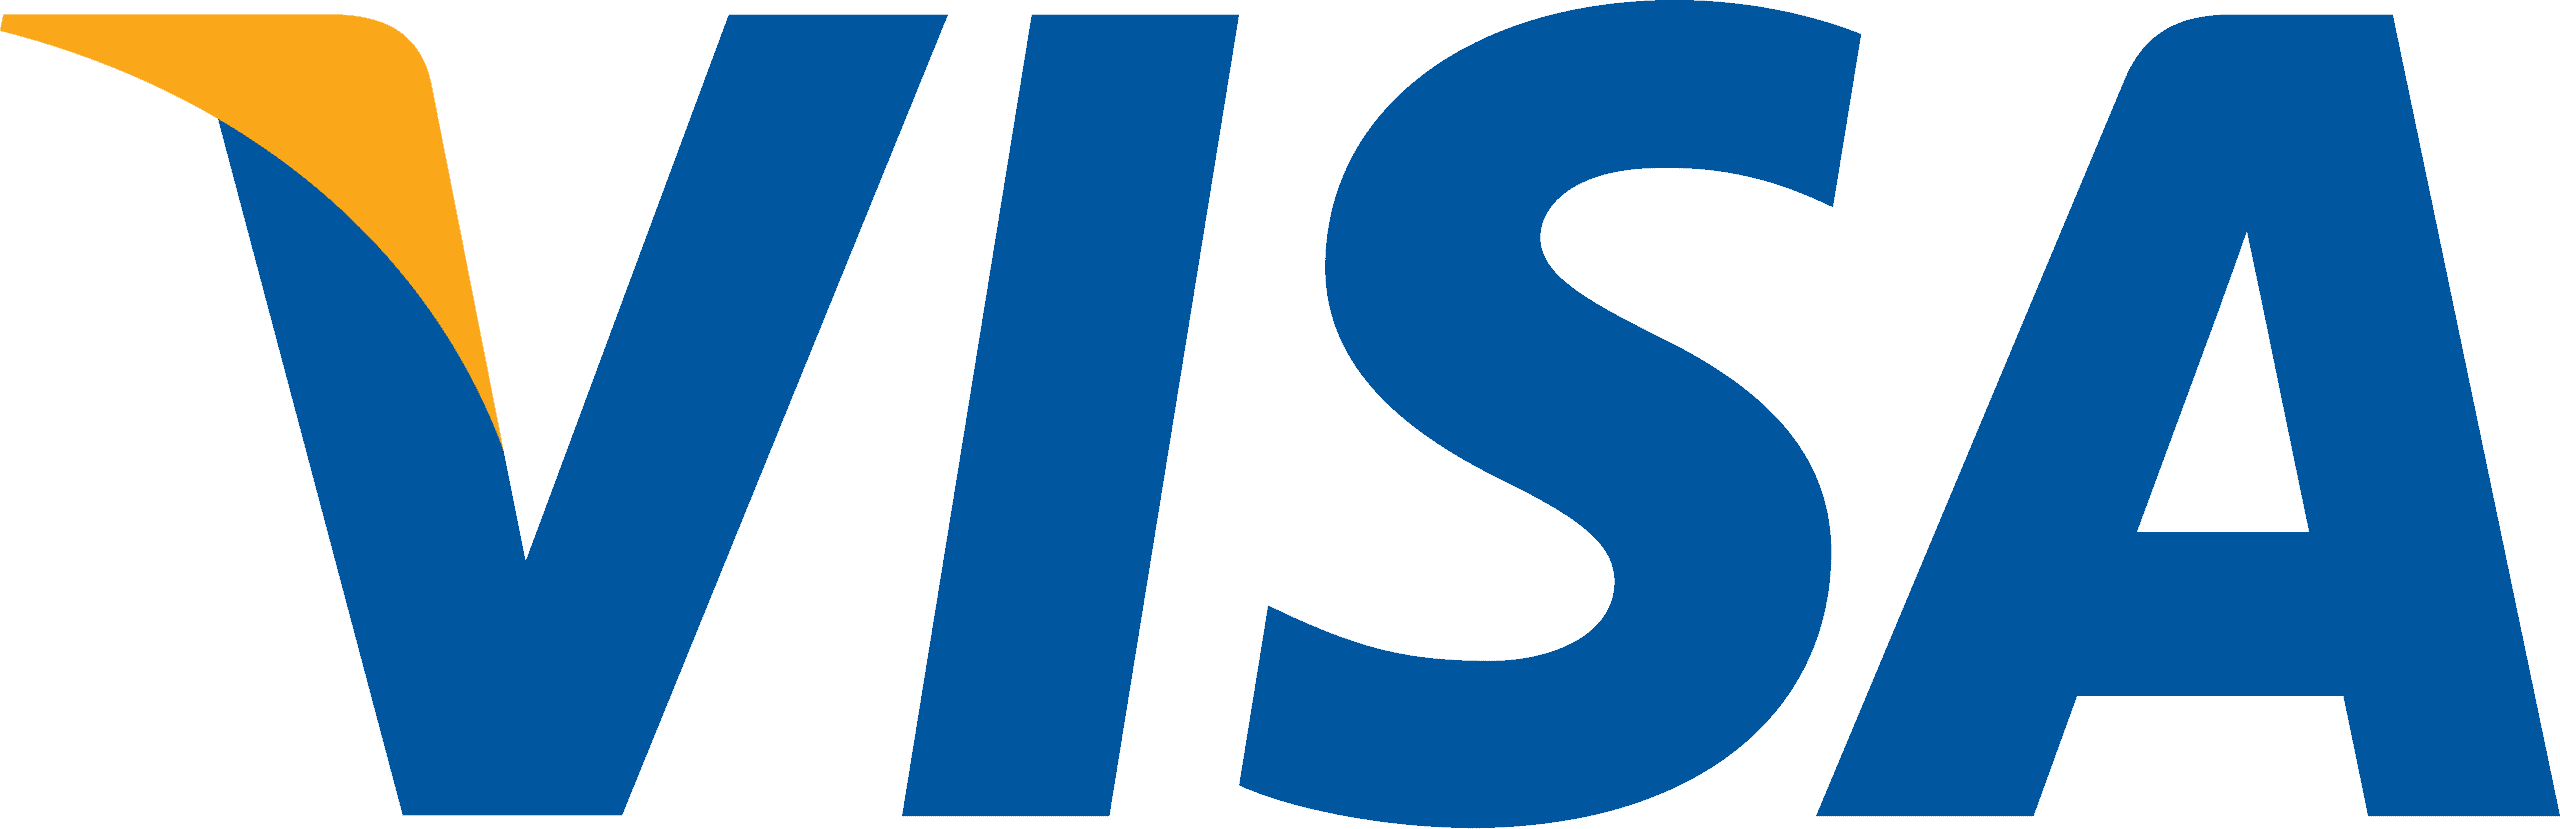 Visa Inc Aktie Logo